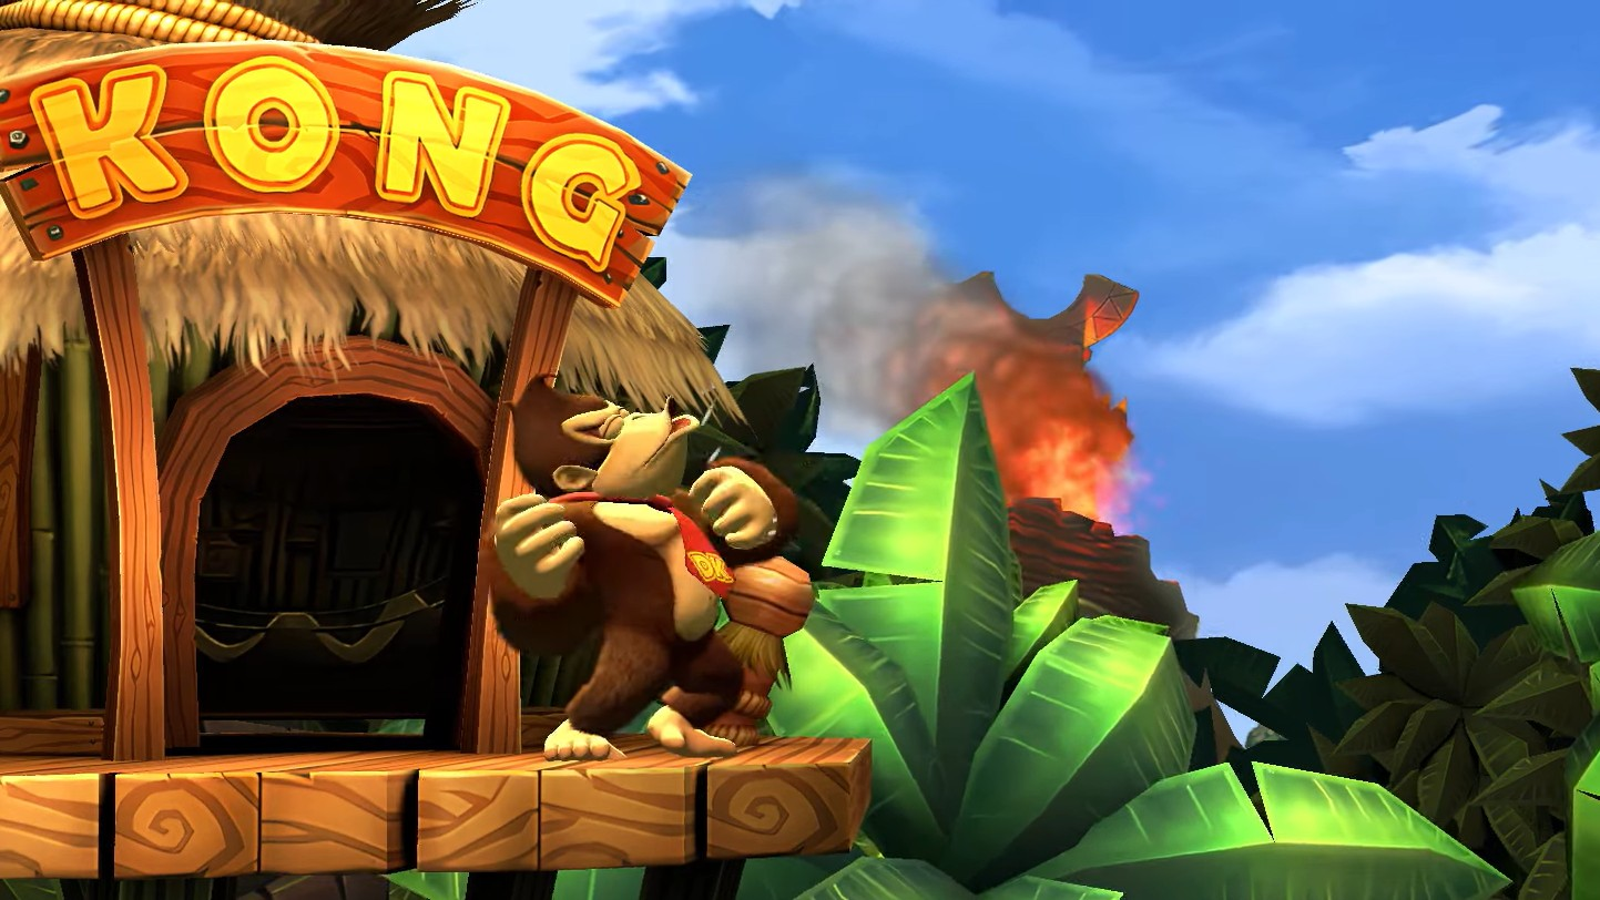 Donkey Kong Country Returns HD für Nintendo Switch bei Nintendo Direct angekündigt